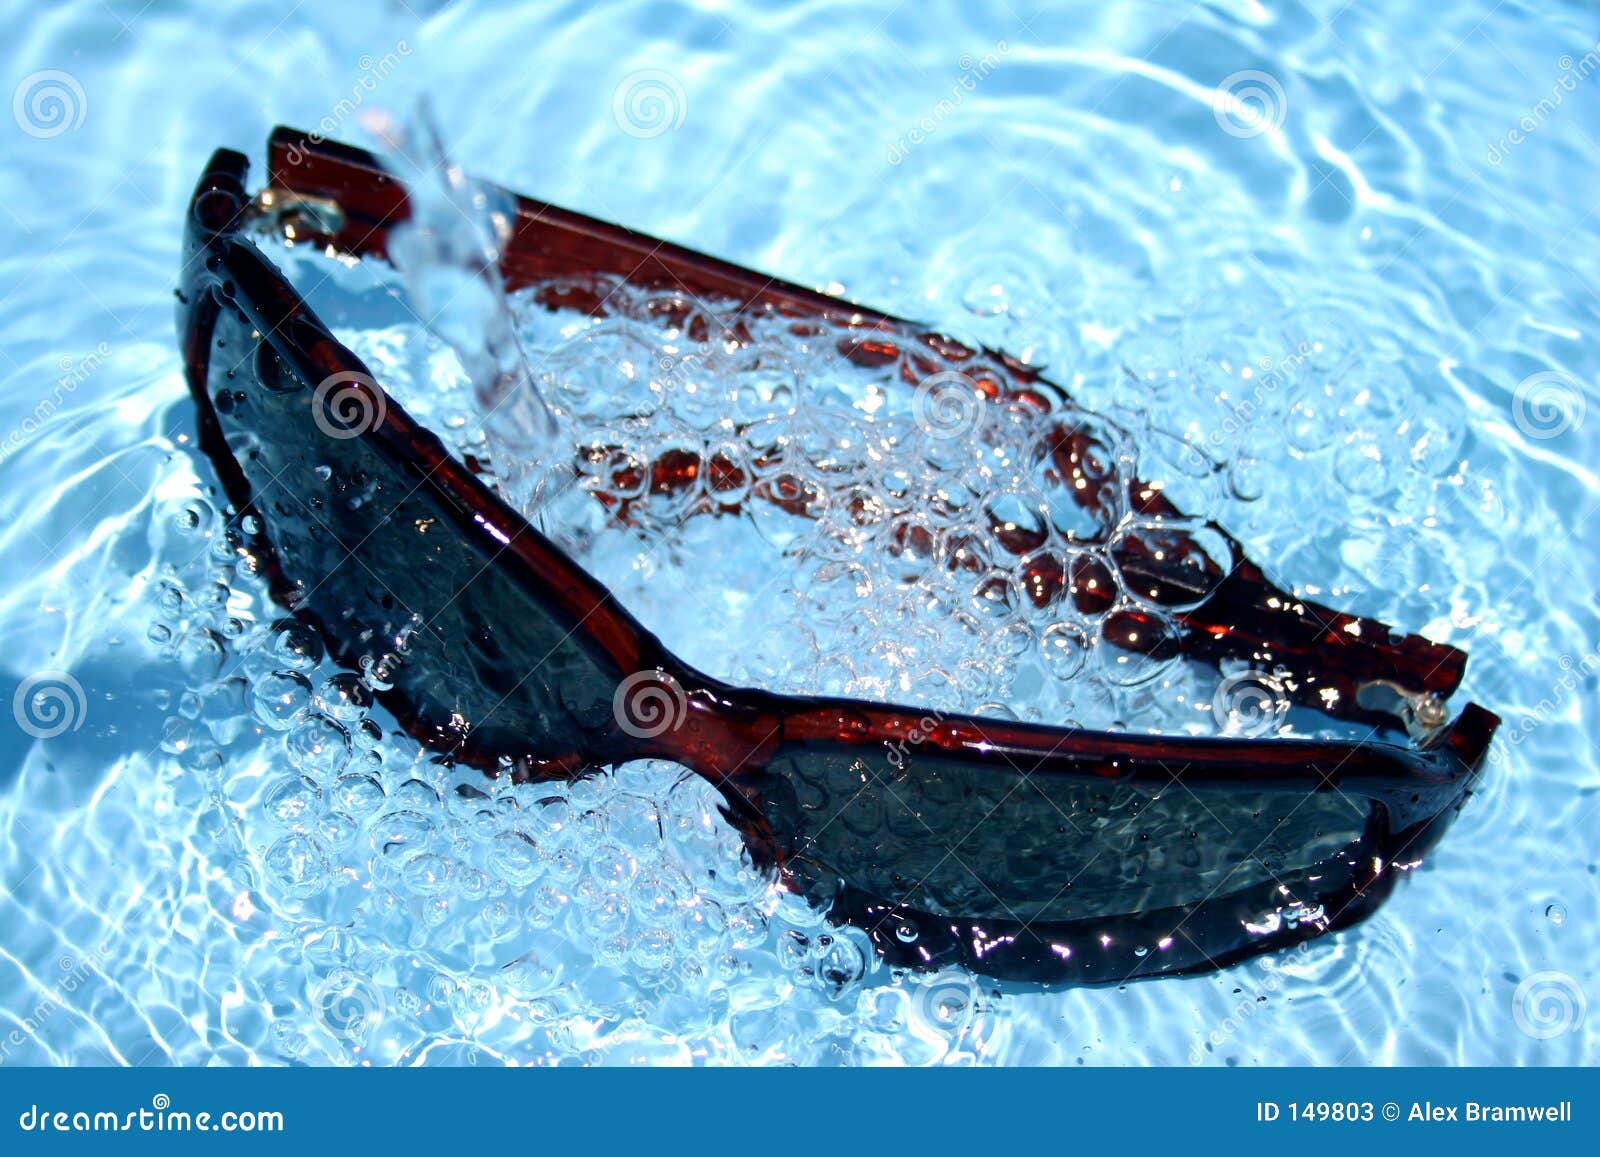 sunglasses in water